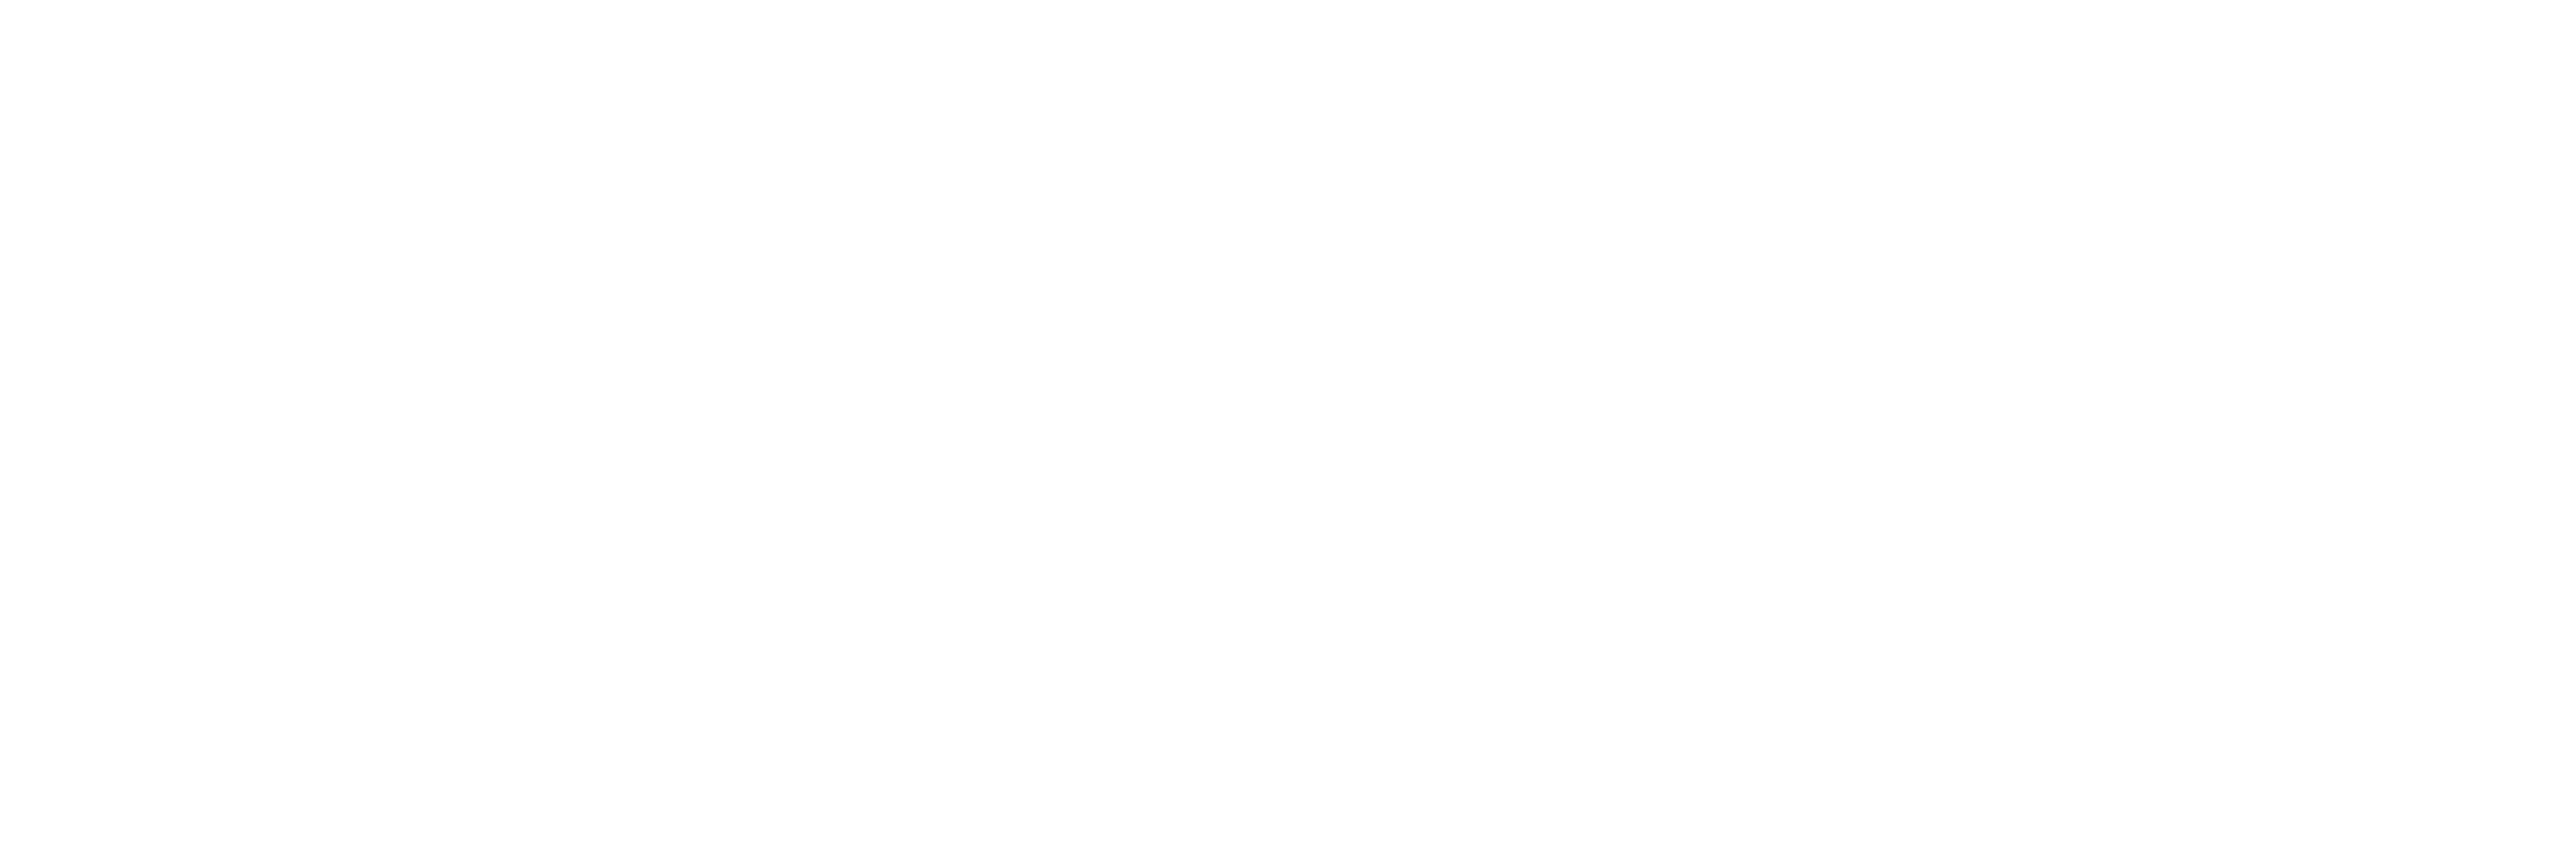 AniCura Dierenkliniek Rijngeest - Oegstgeest logo